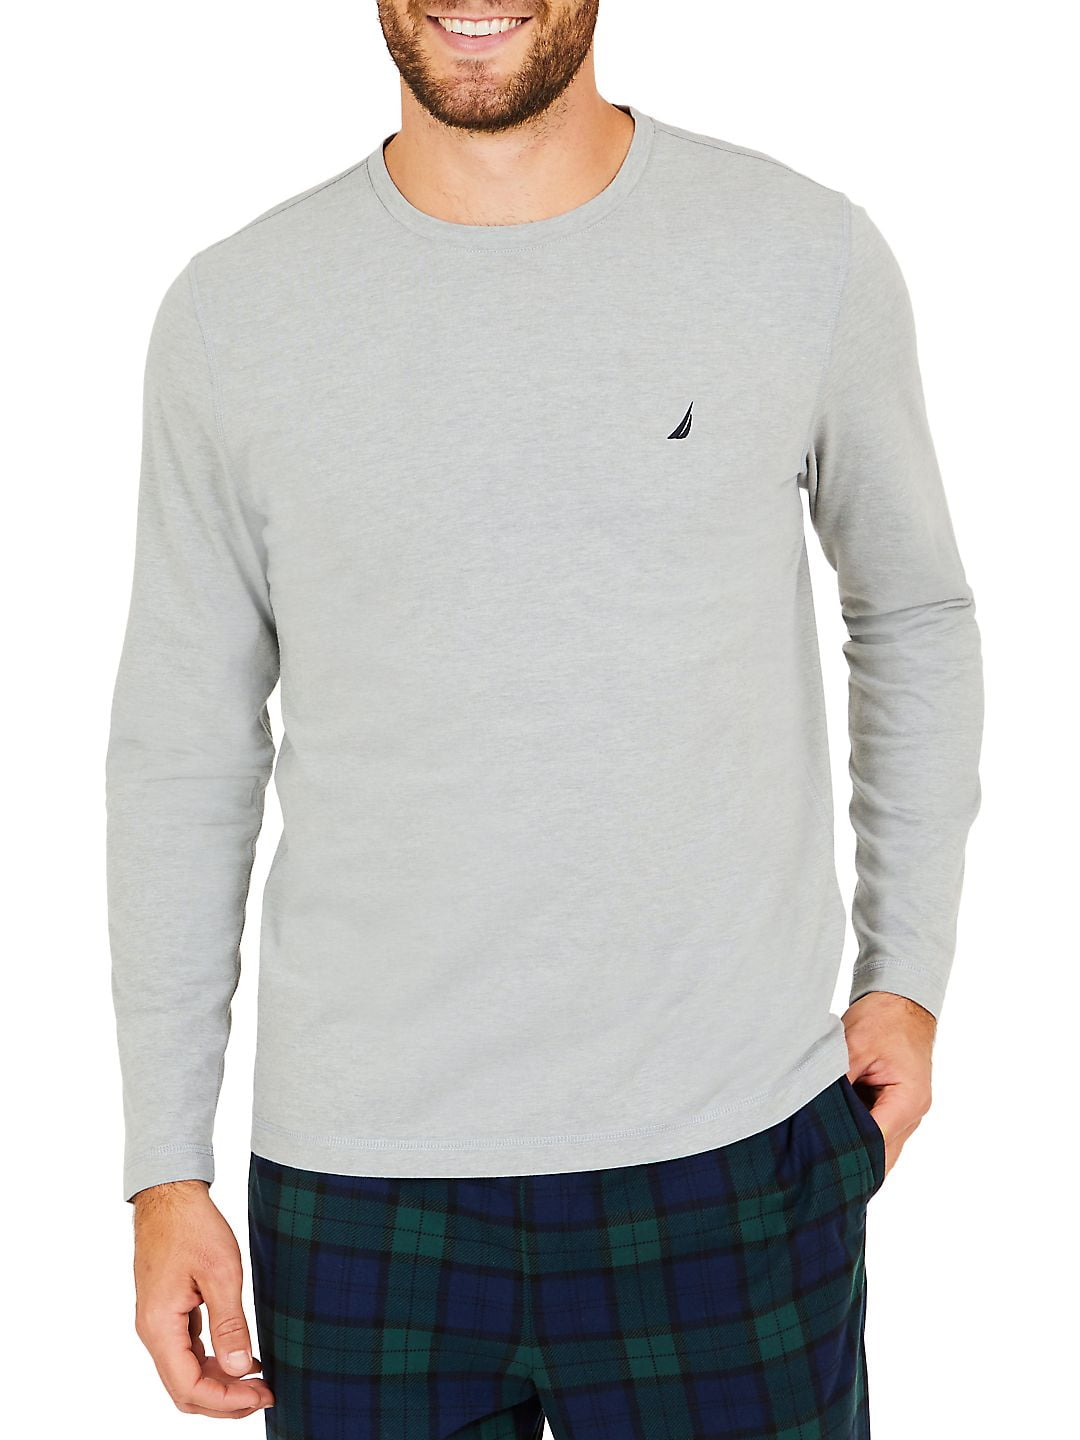 Nautica Mens Light Gray Long Sleeve Sleep Shirt M L  NWT $40 